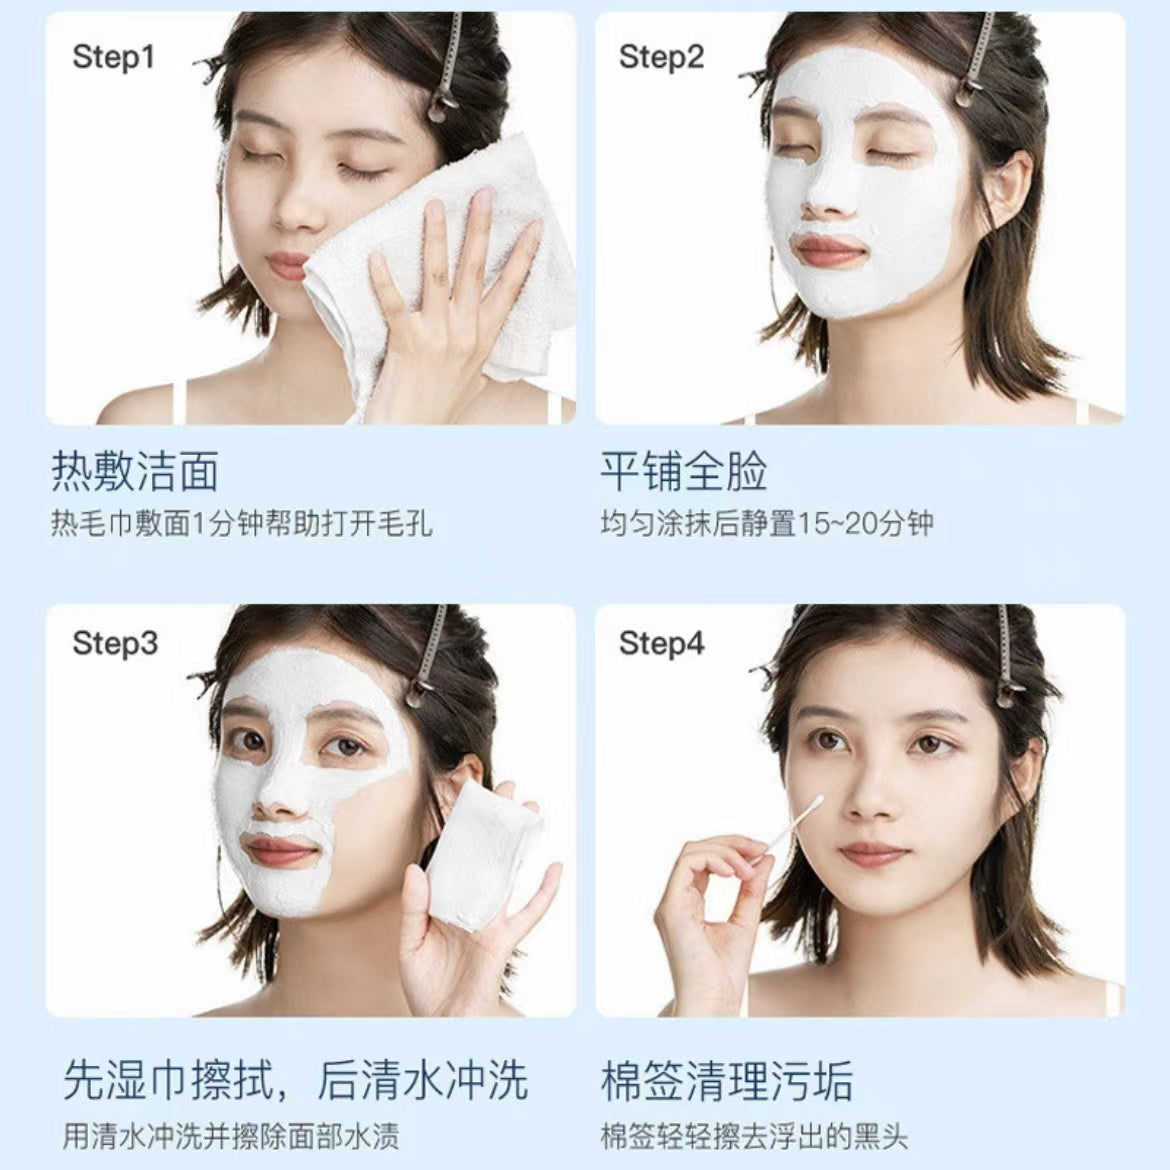 Tiktok/Douyin Hot EIIO Moisturizing Cleansing Mud Mask 100ML【Tiktok抖音爆款】奕沃清润净肤清洁泥膜